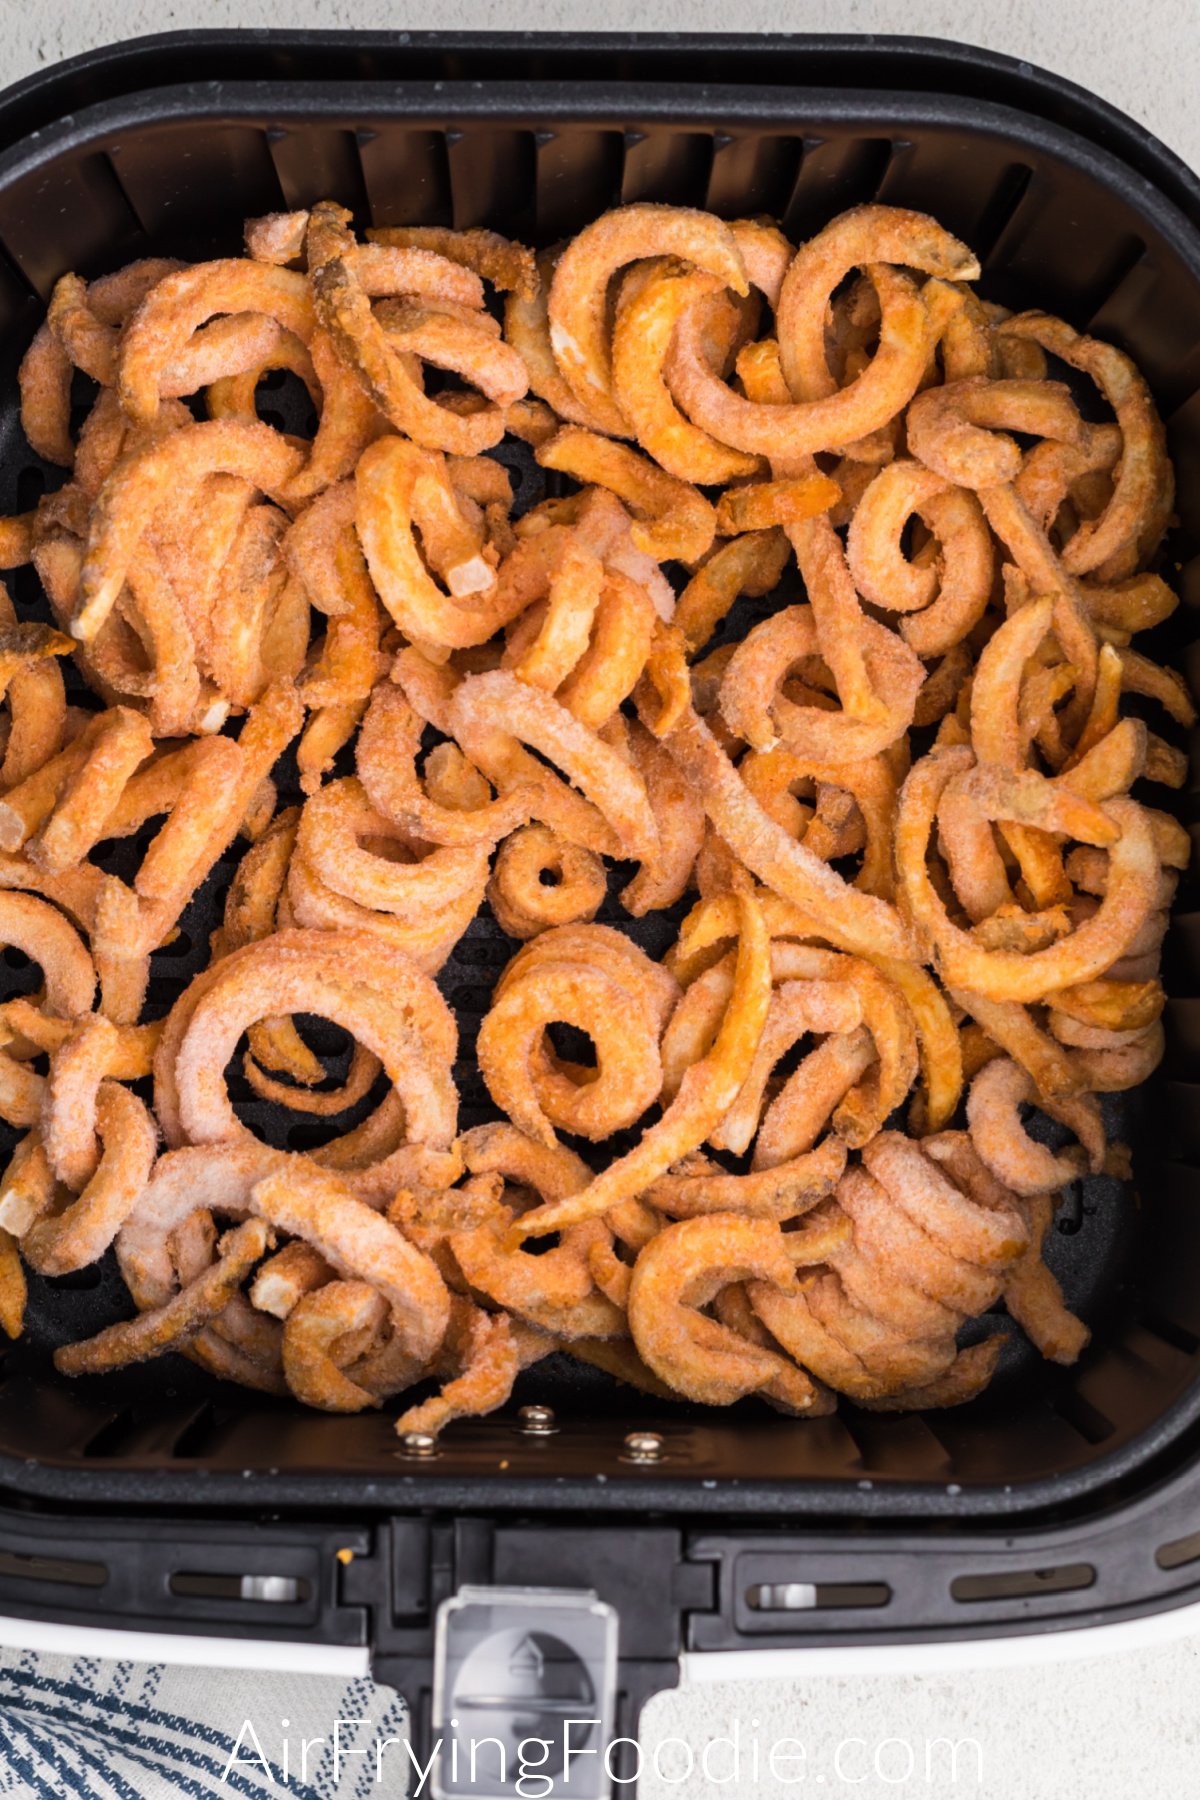 frozen curly fries in air fryer basket.